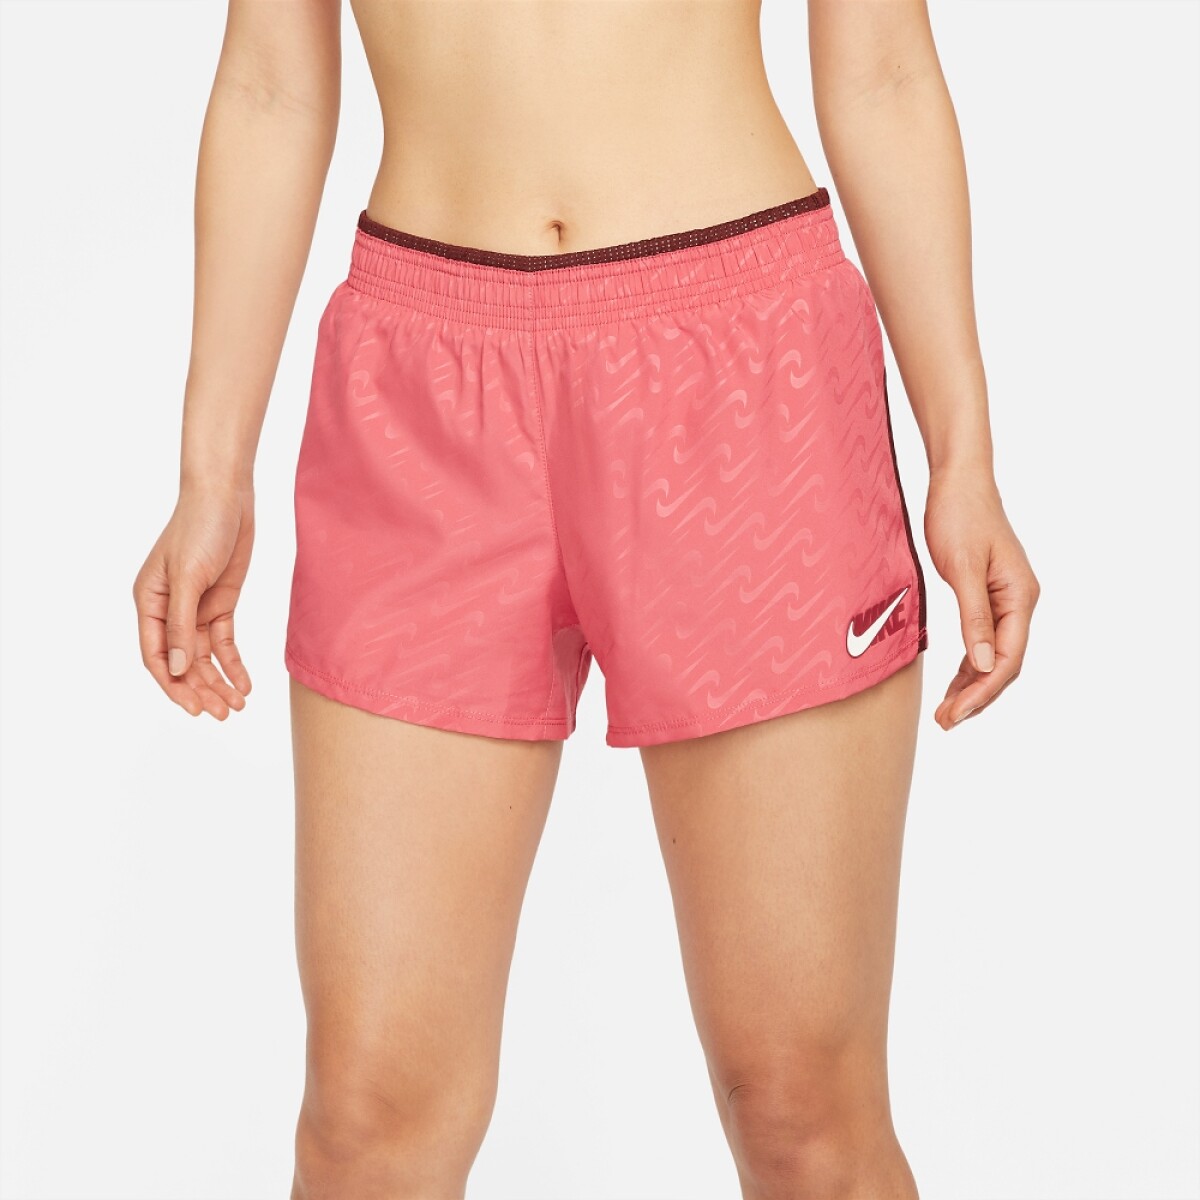 Short Nike Running Dama Archeo Pink - S/C 